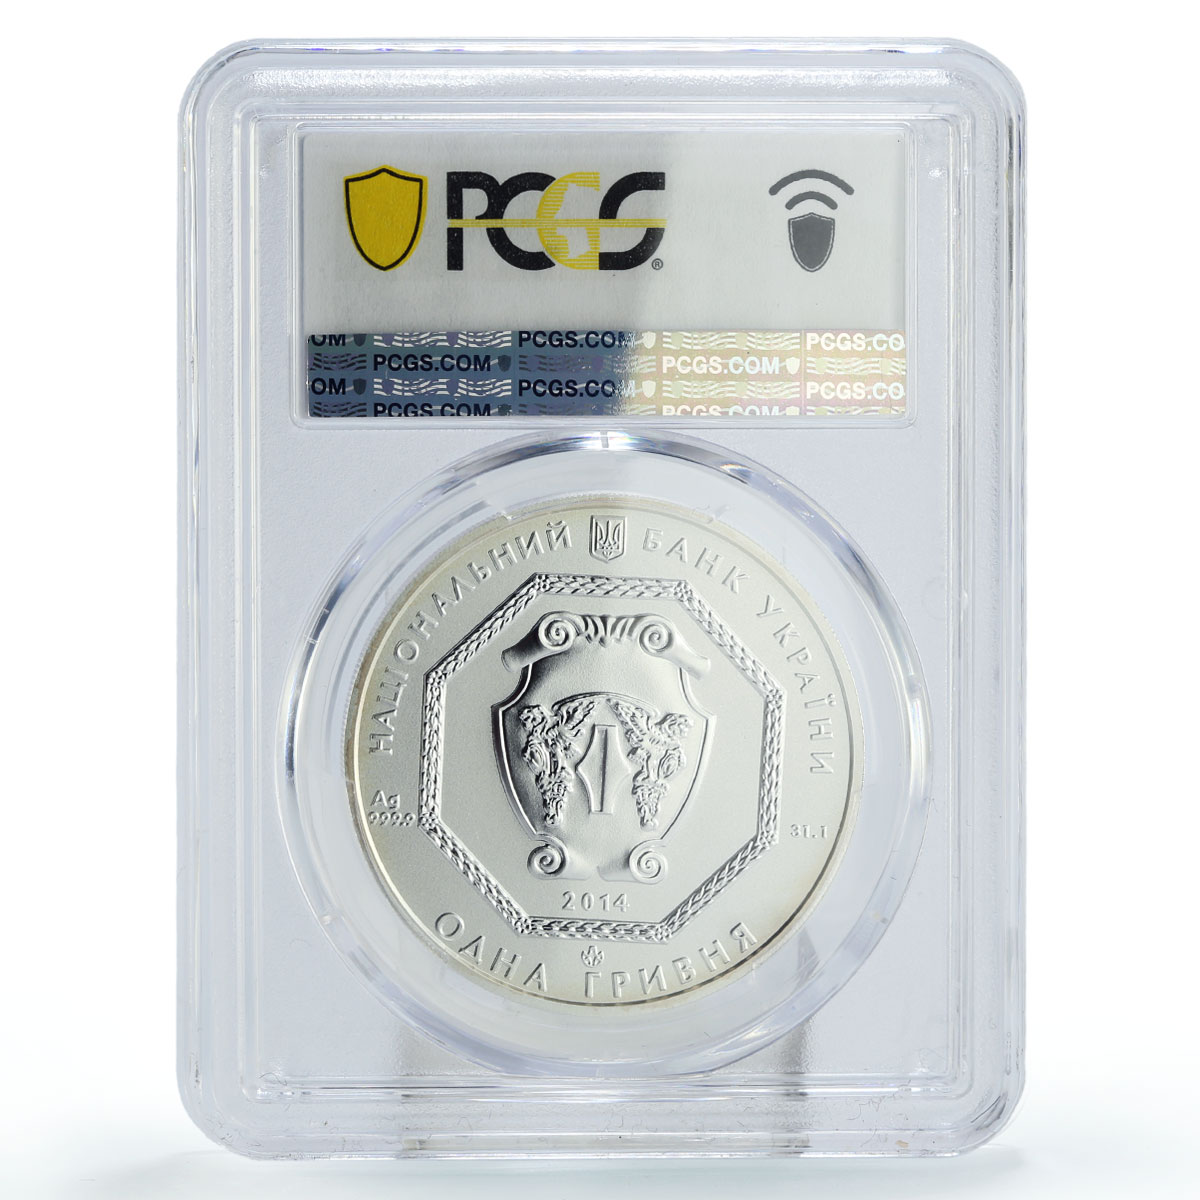 Ukraine 1 hryvnia Archangel Michael Archistratus MS70 PCGS silver coin 2014